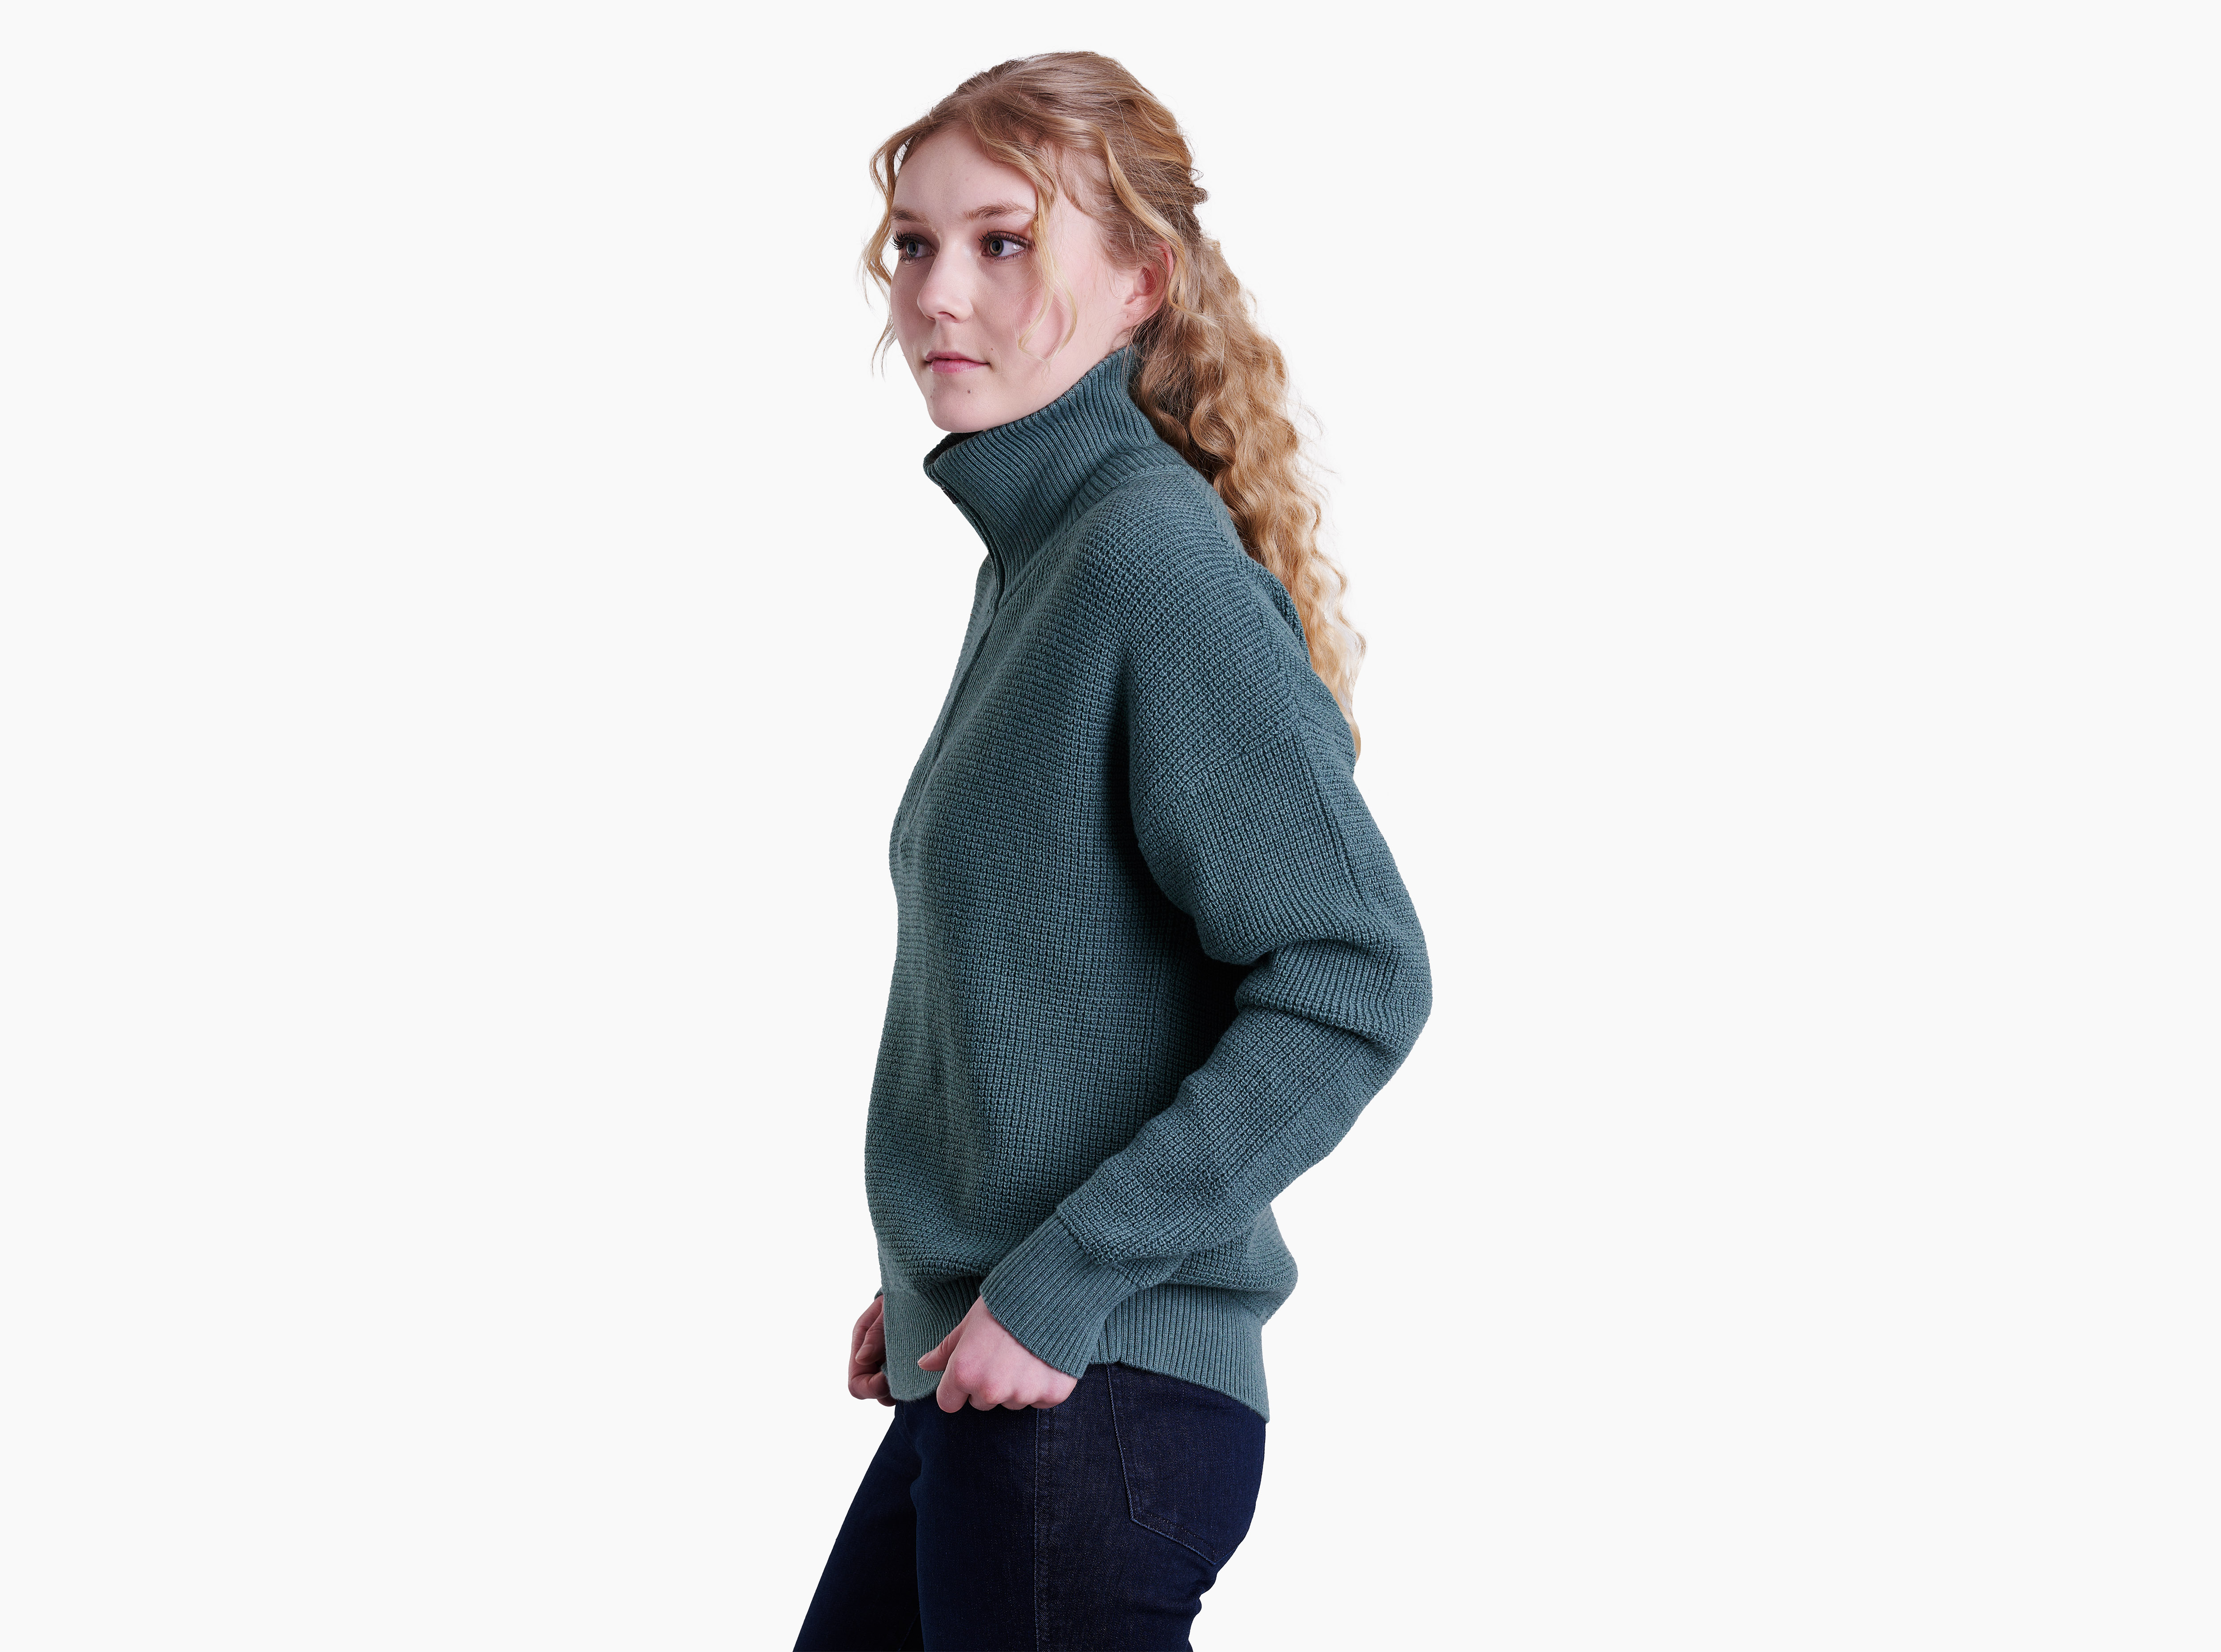 Kuhl Women's Brynn Cardigan Sweater